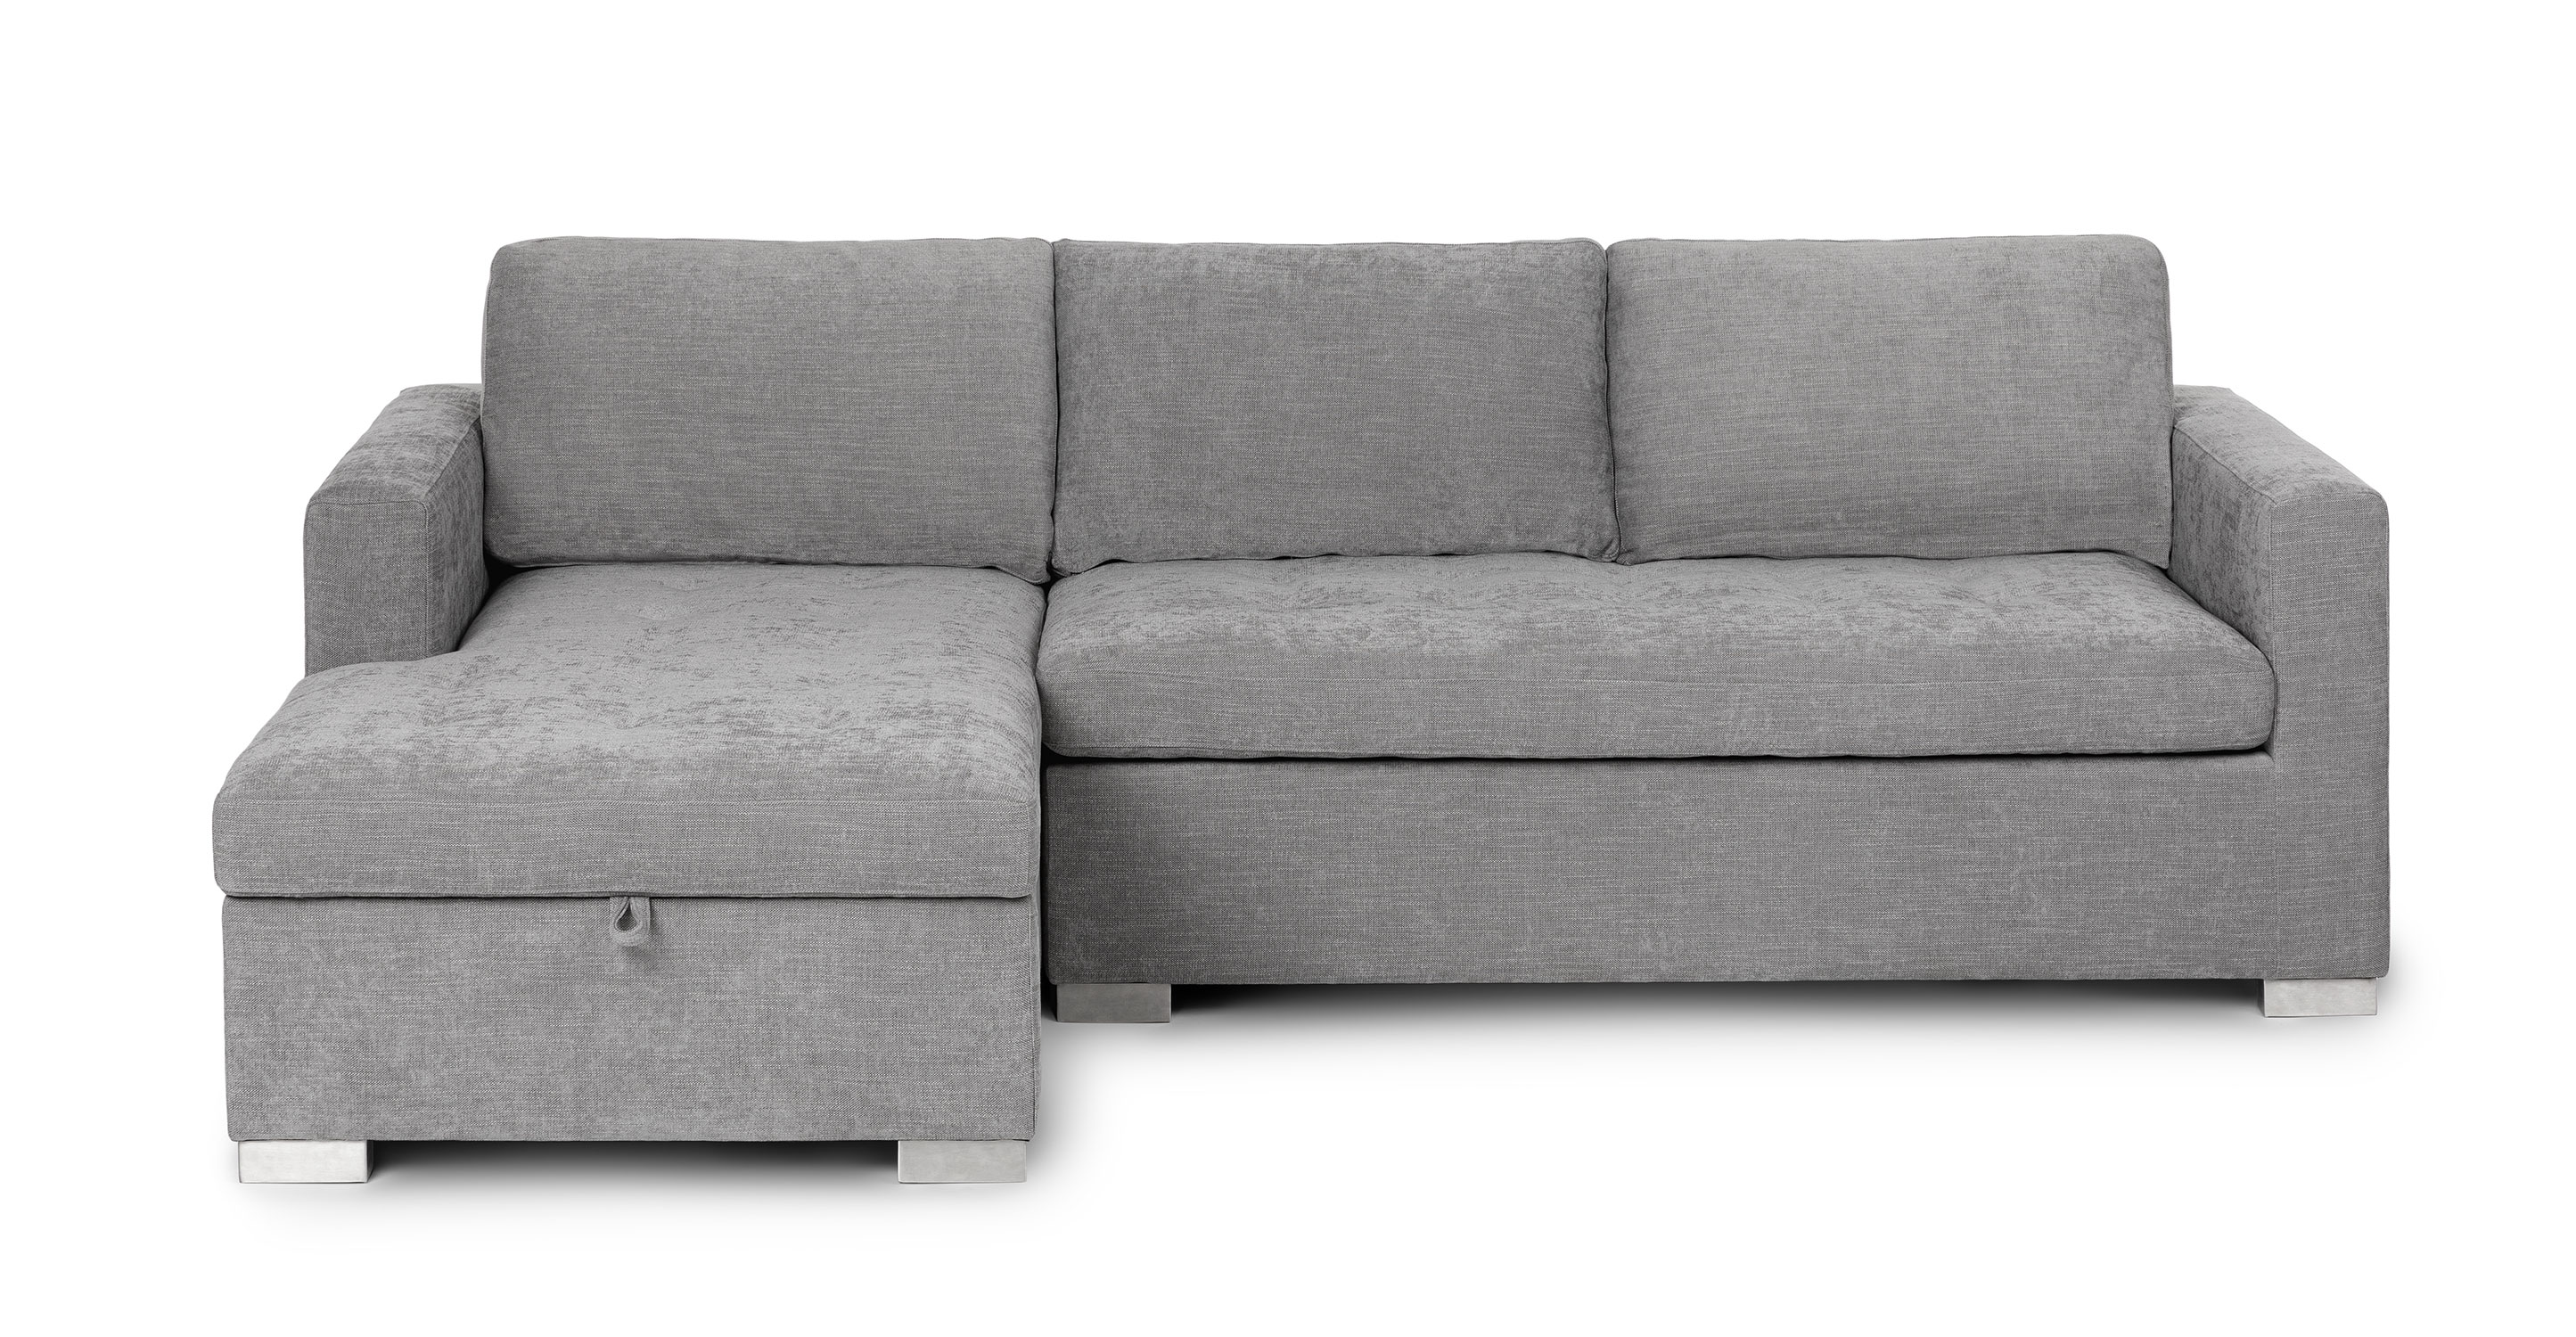 Contemporary Modern Sectional Sleeper, Contemporary Sectional Sofa Sleeper